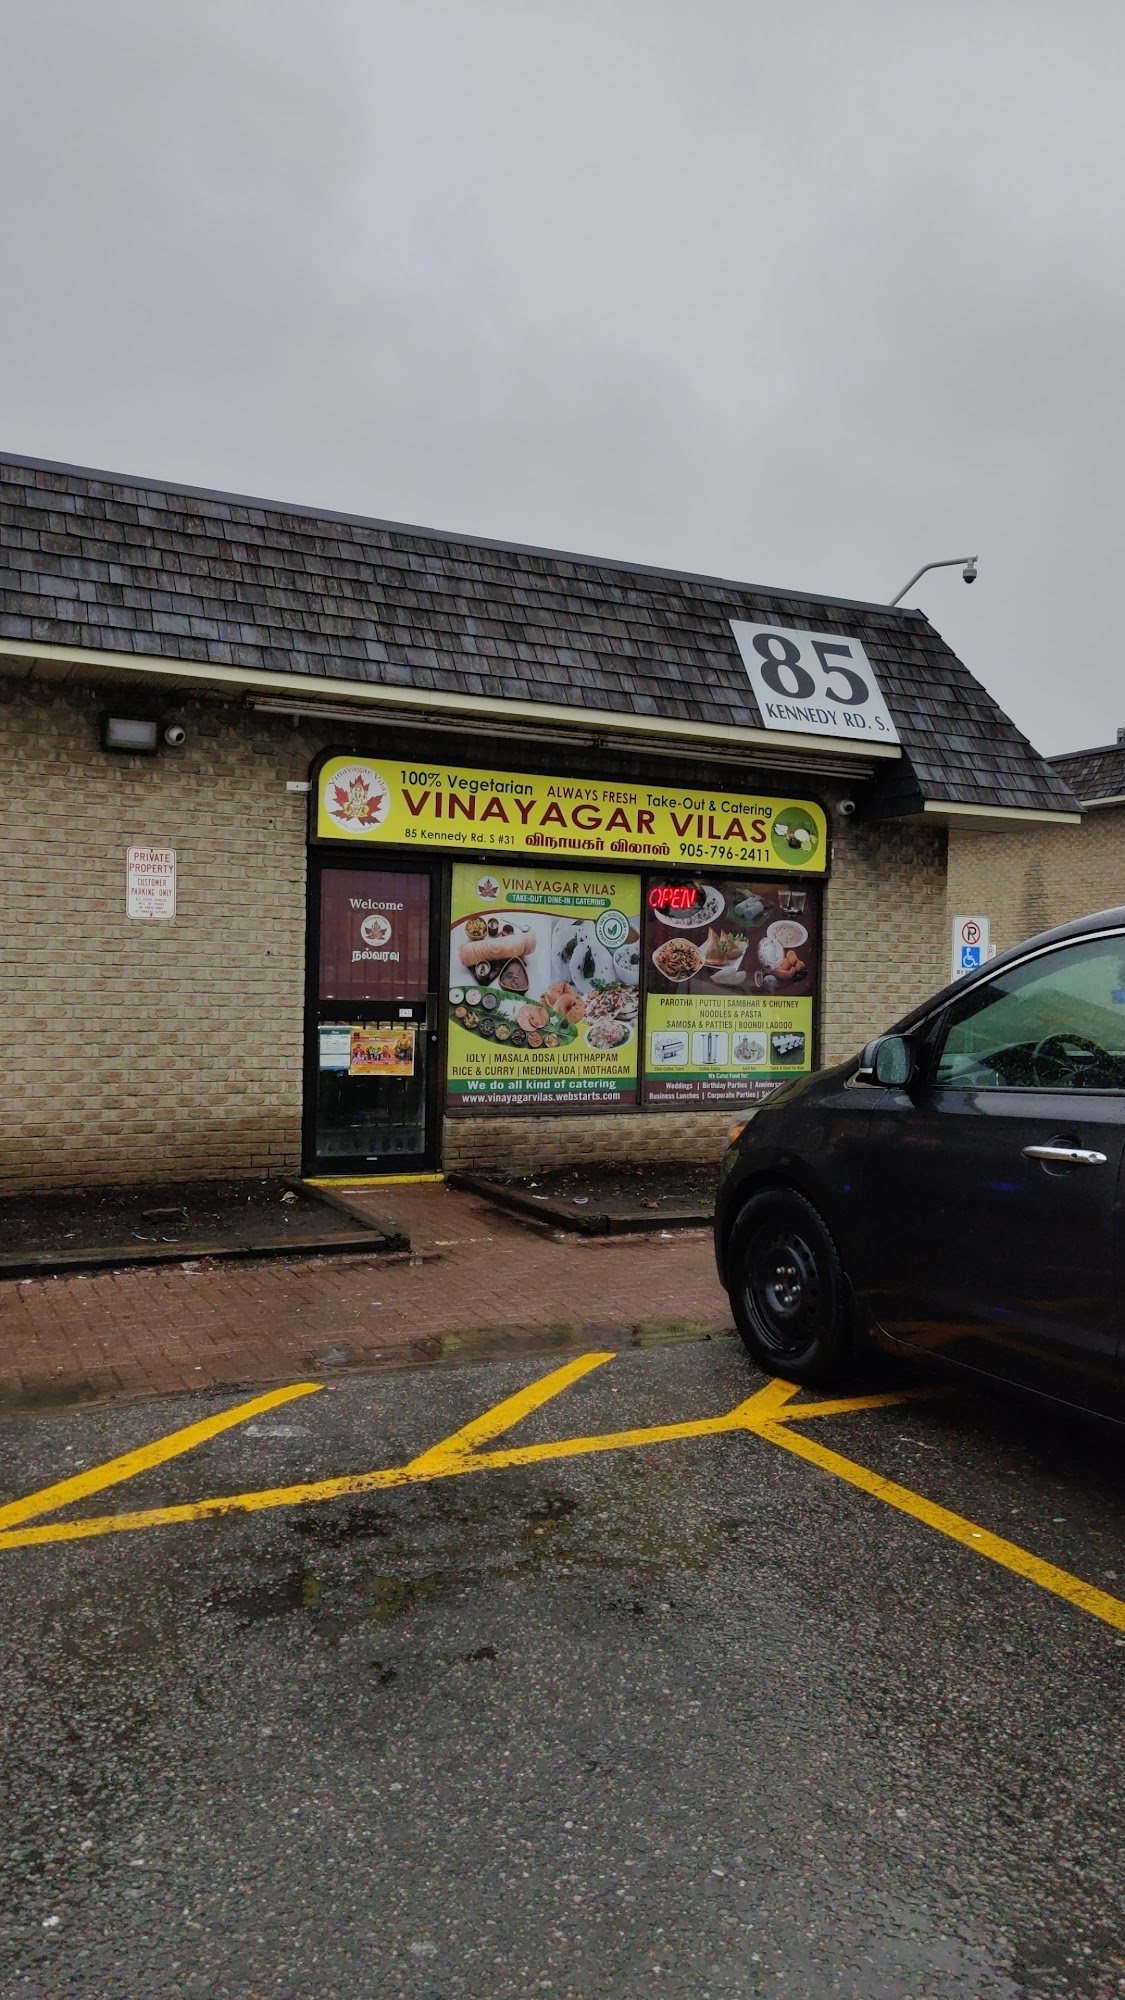 Vinayagar Vilas™ Take-Out & Catering